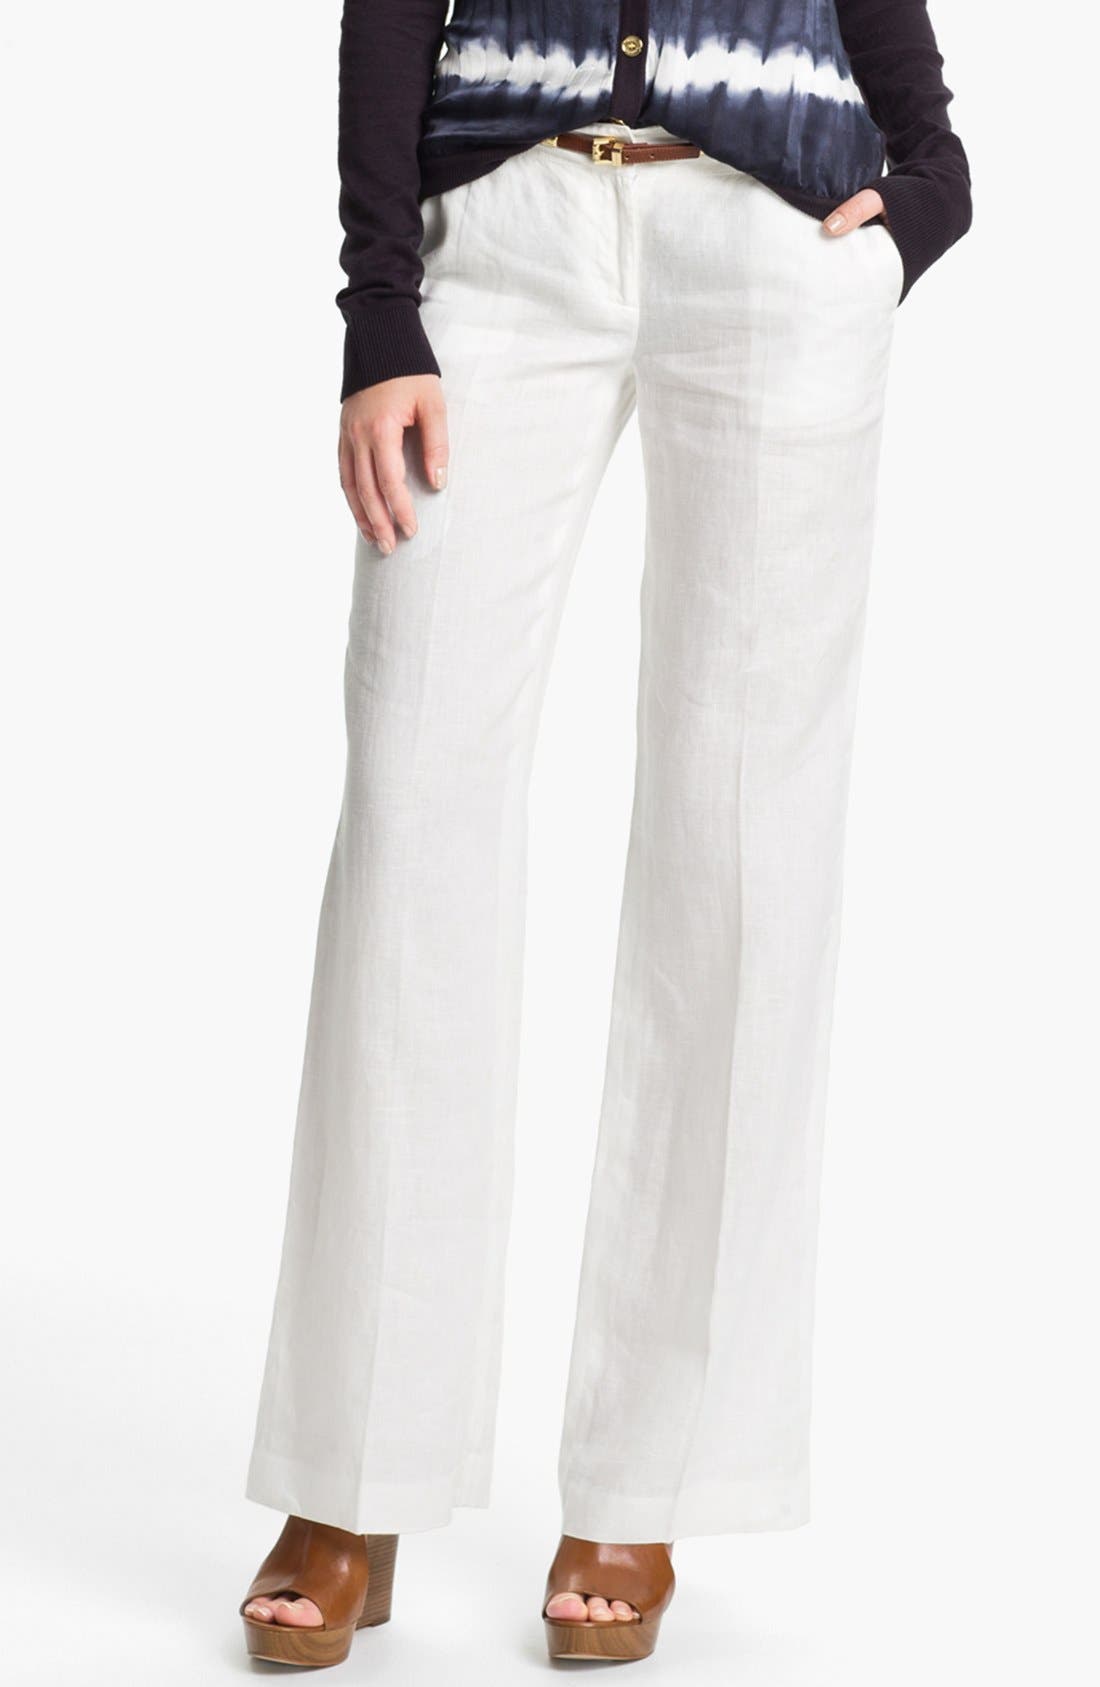 michael kors white linen pants